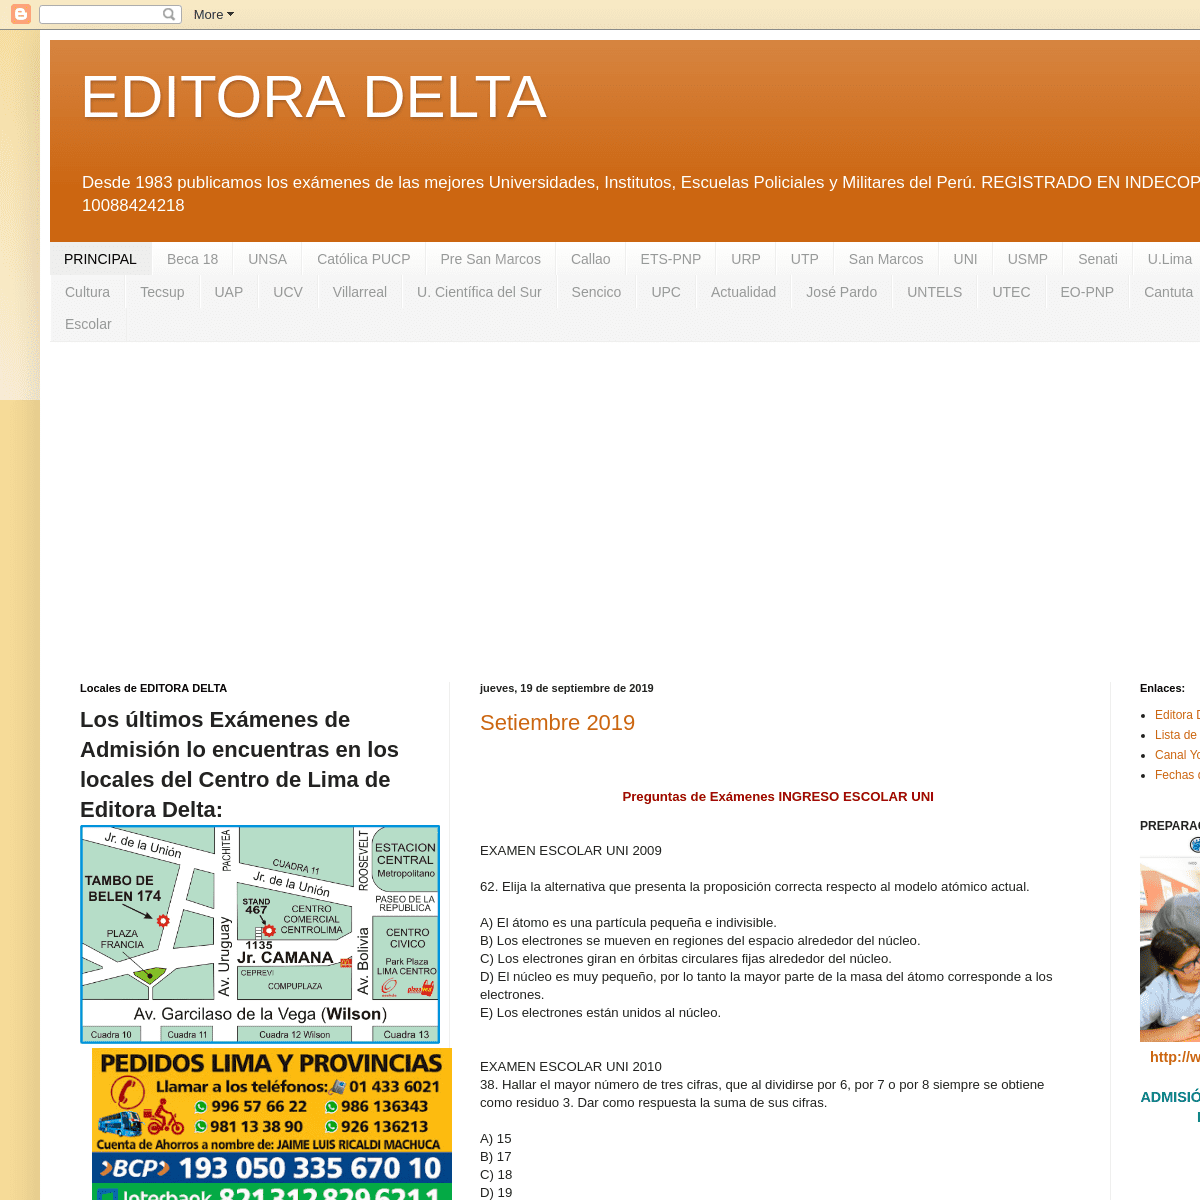 A complete backup of editoradelta.blogspot.com